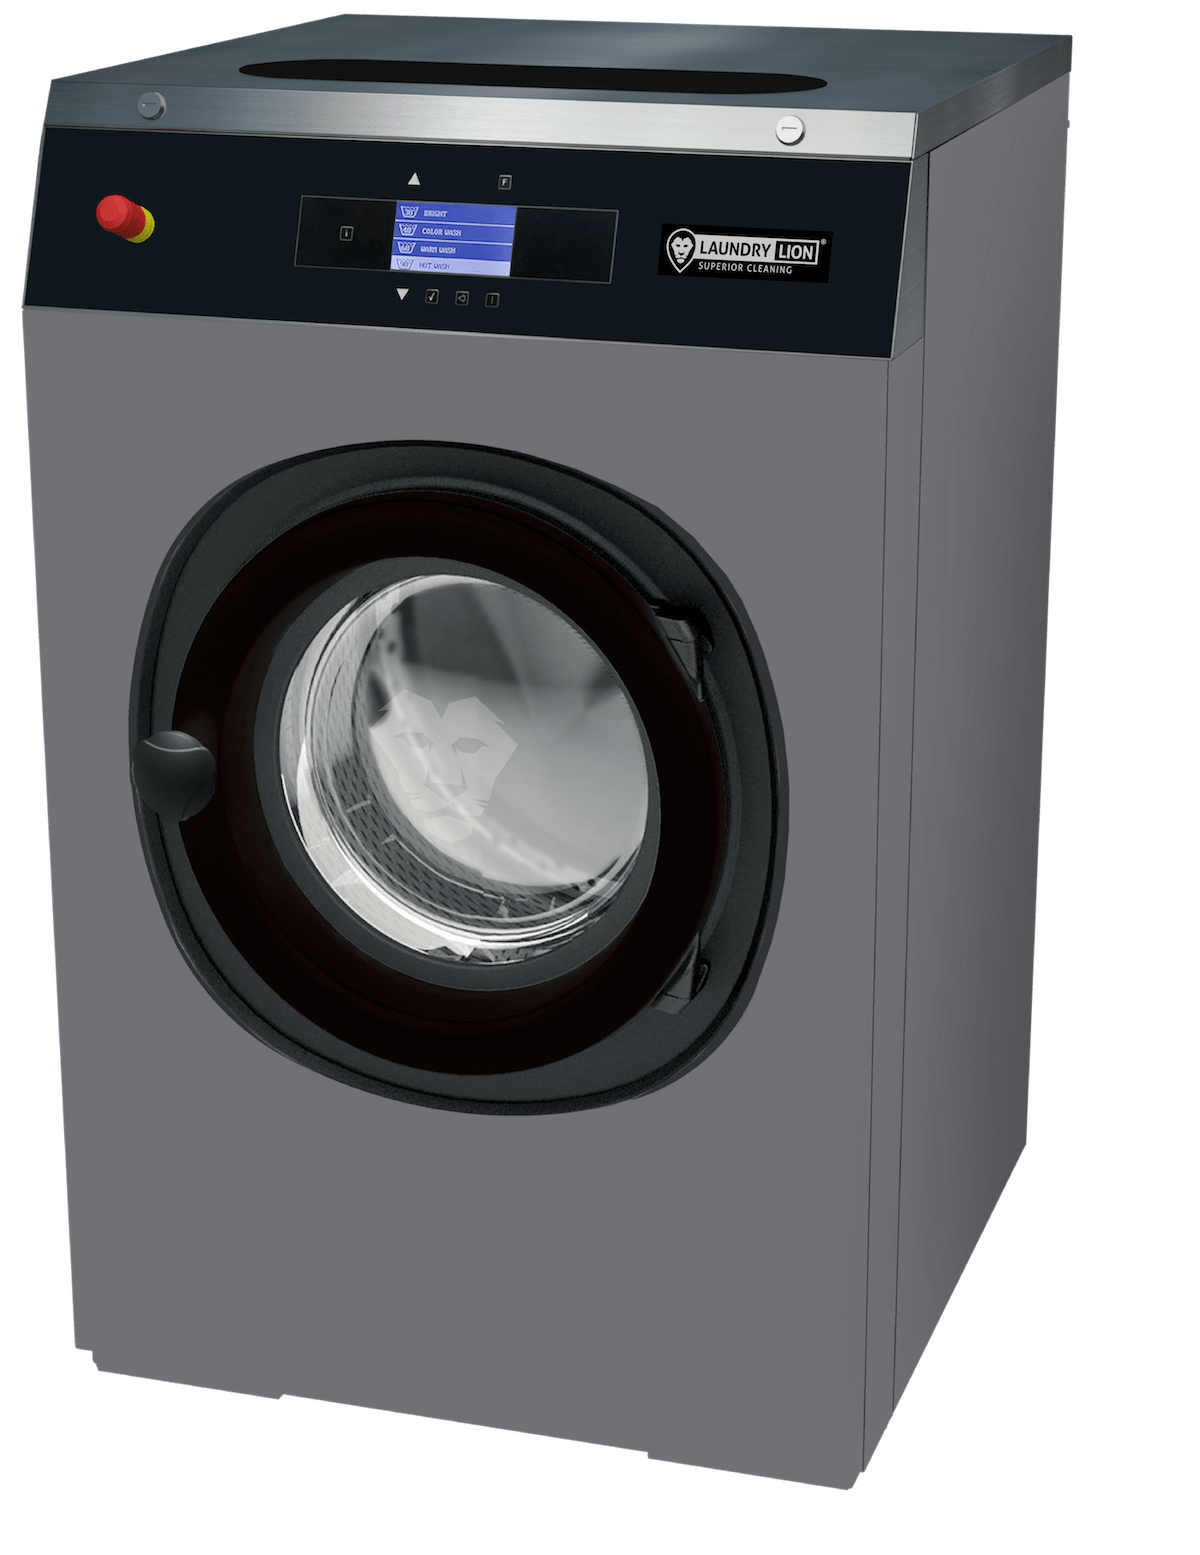 Theseus nakoming reputatie Industriële wasmachine 15 kg - LaundryLion HS-135